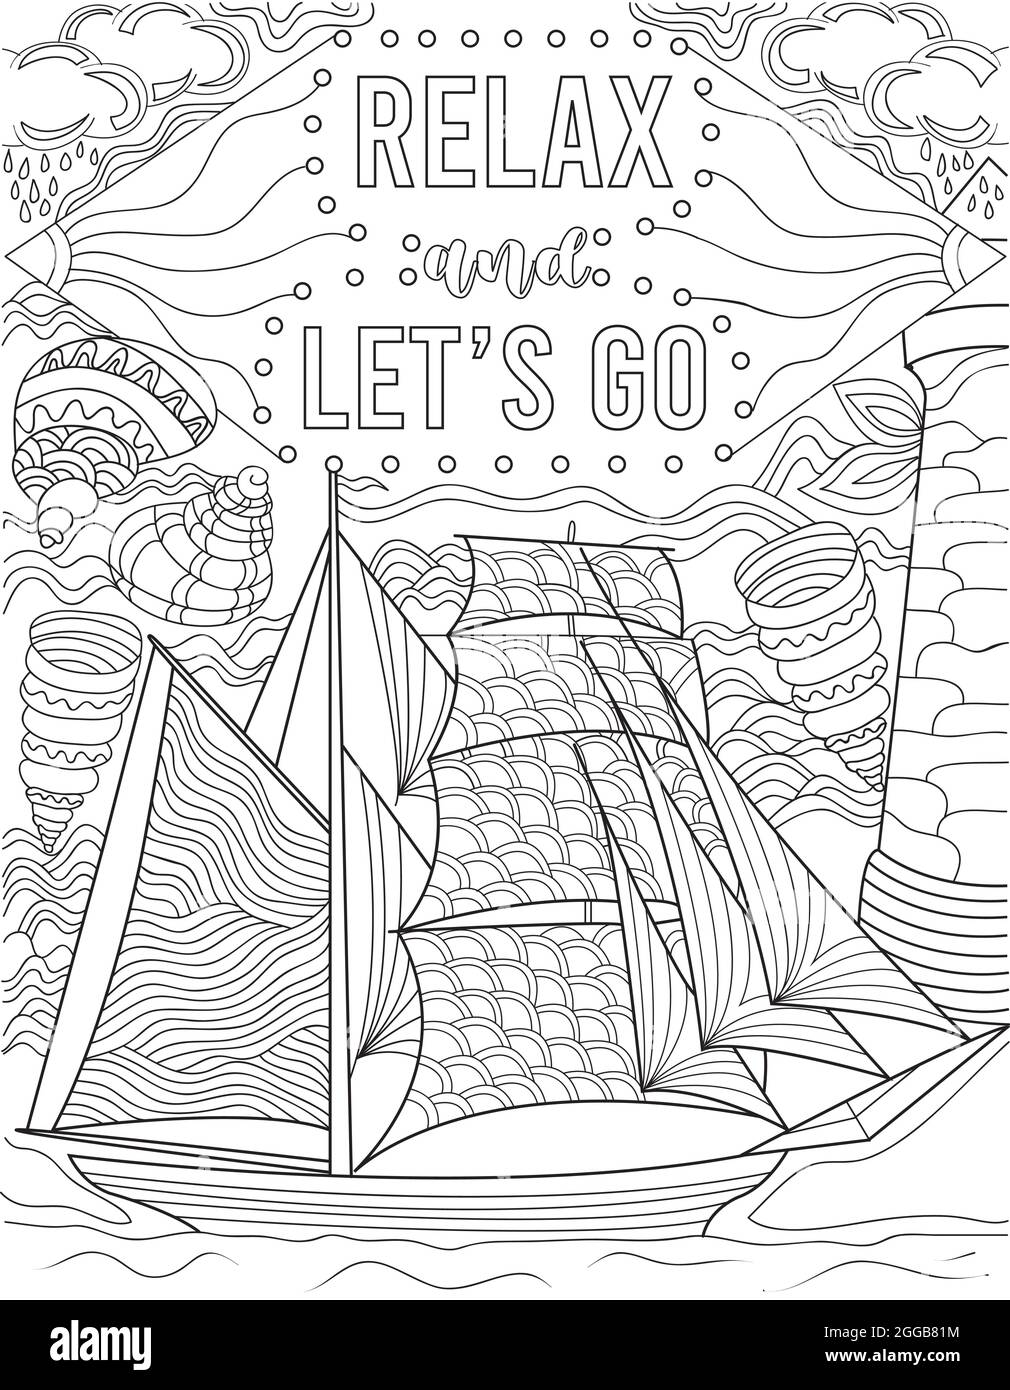 Ship in a bottle,Metal Art Nautical,Boats,Ship,Pirate,Cabin,Gift,Ocean,Sea,Waves